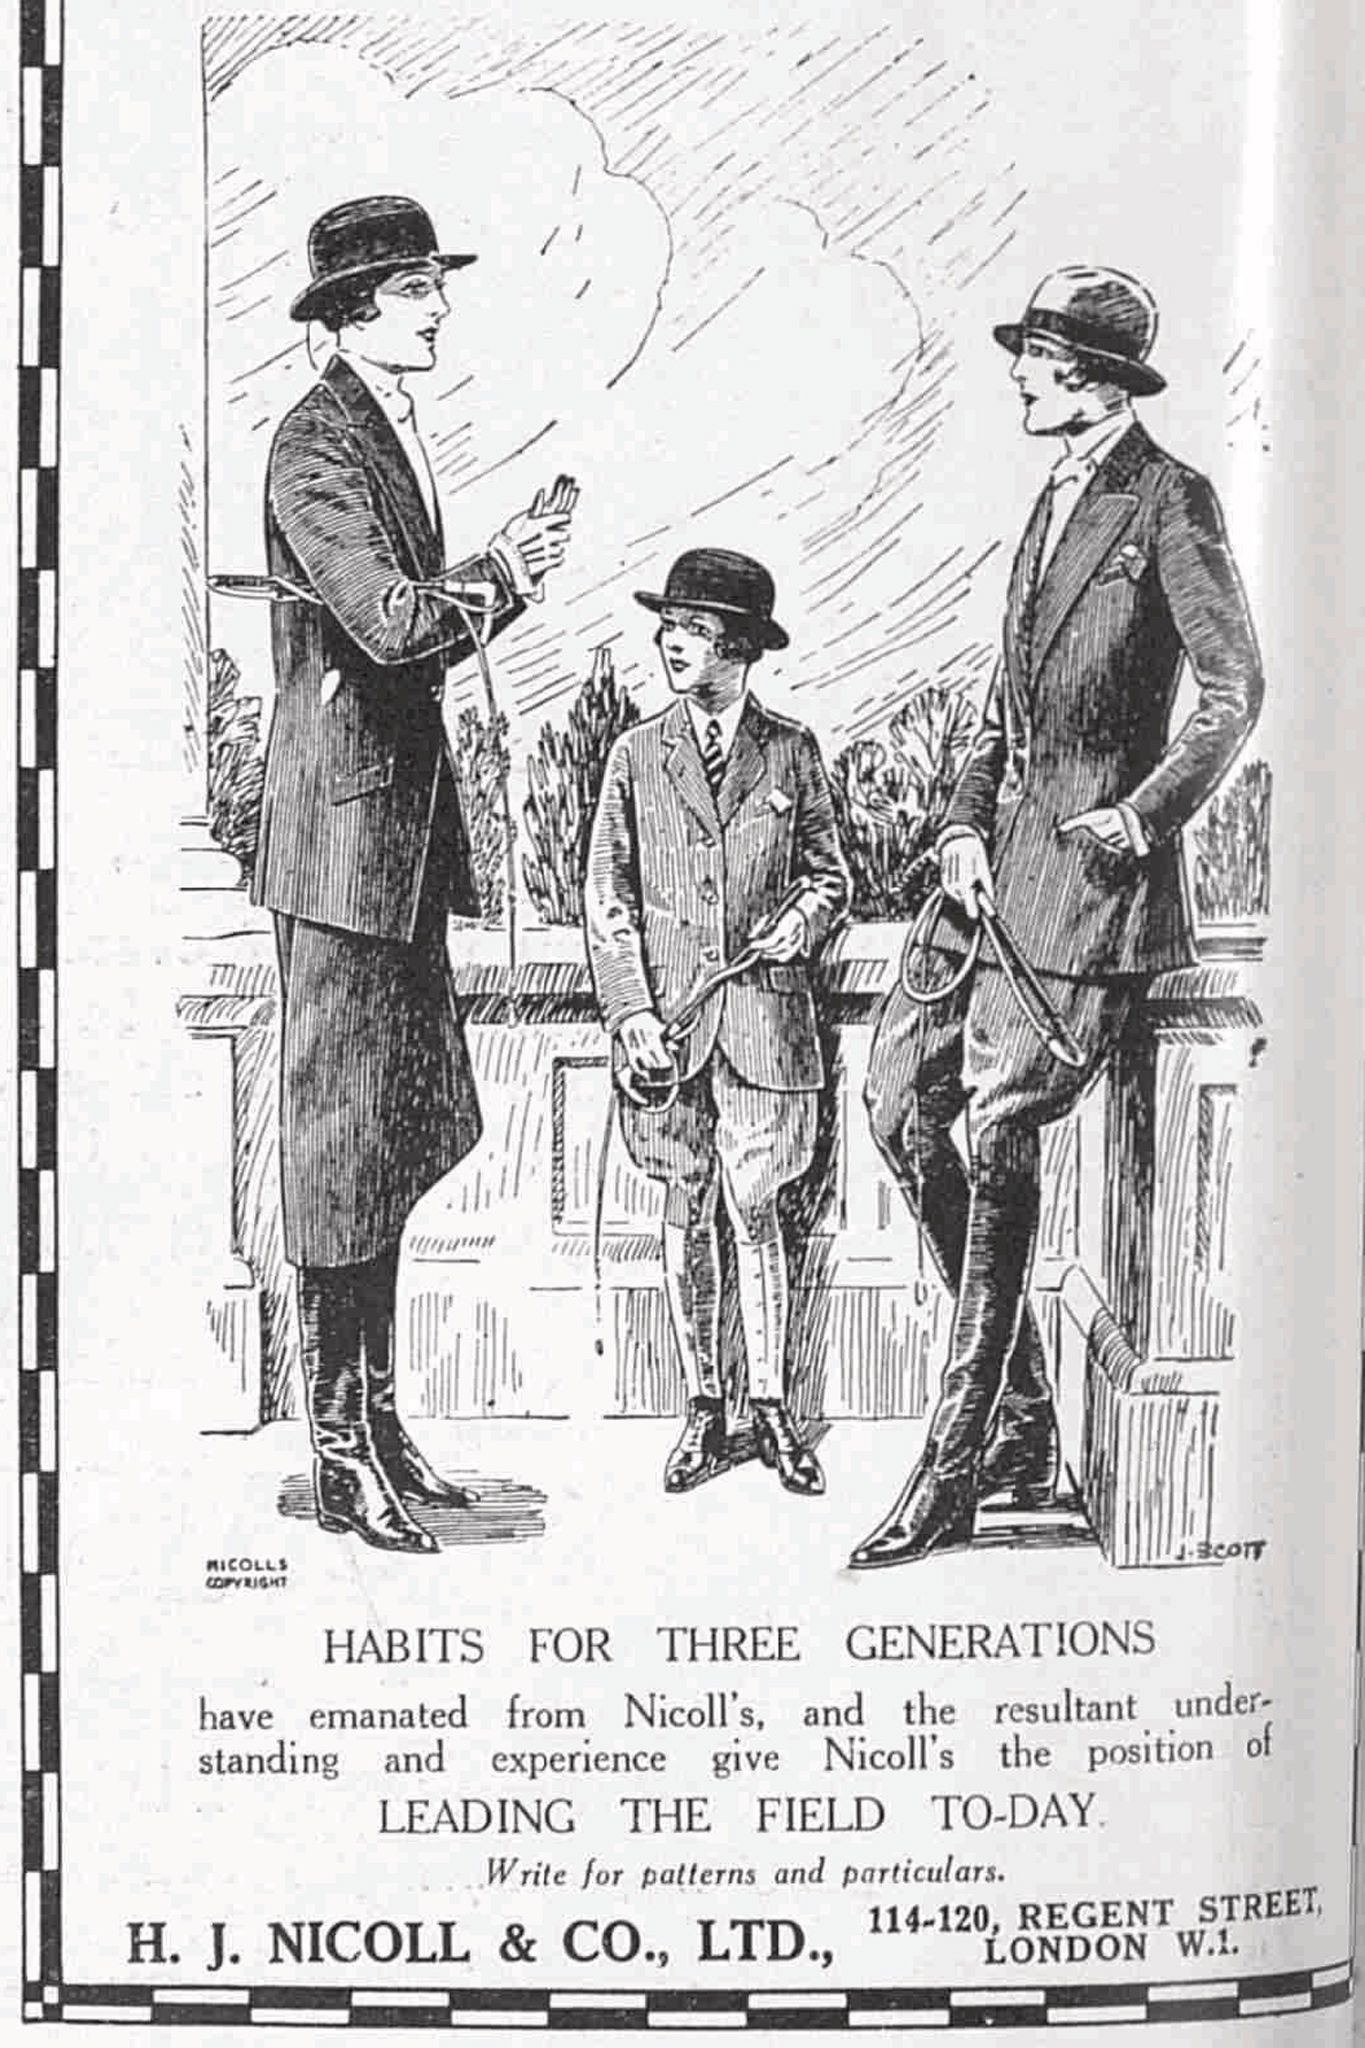 H.J. Nicoll & Co Advert. Source: British Newspaper Archive